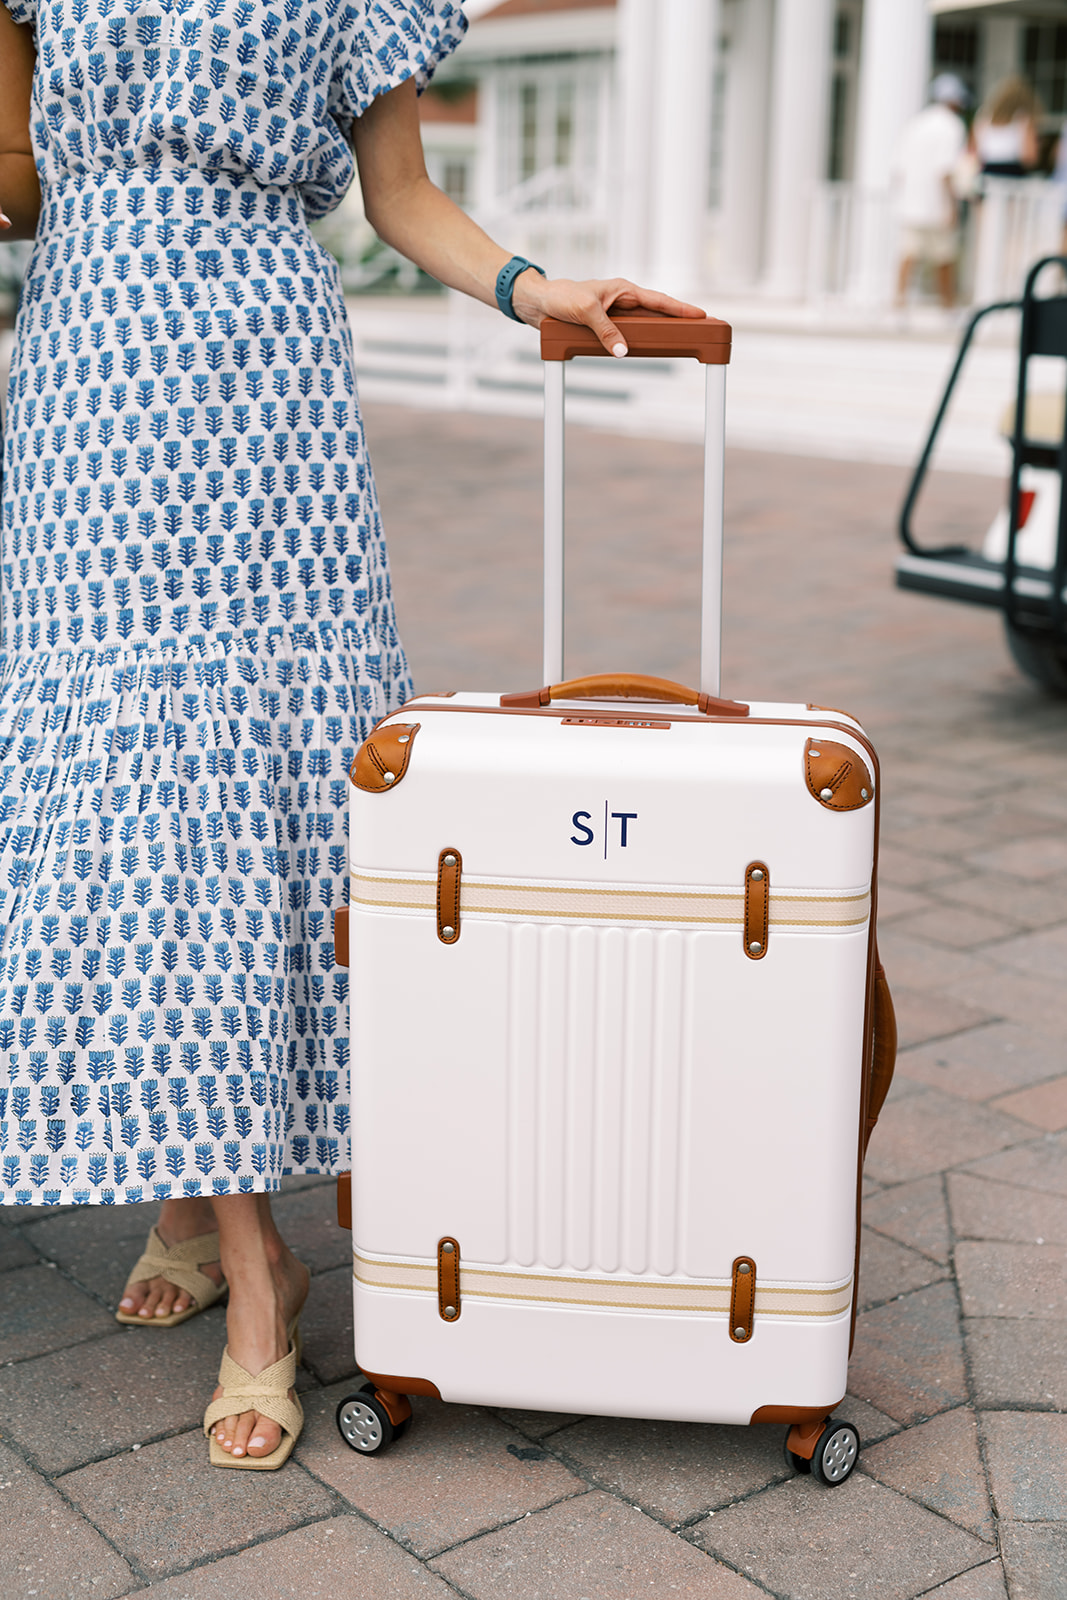 Long Flight Travel Essentials  Travel bag essentials, Travel